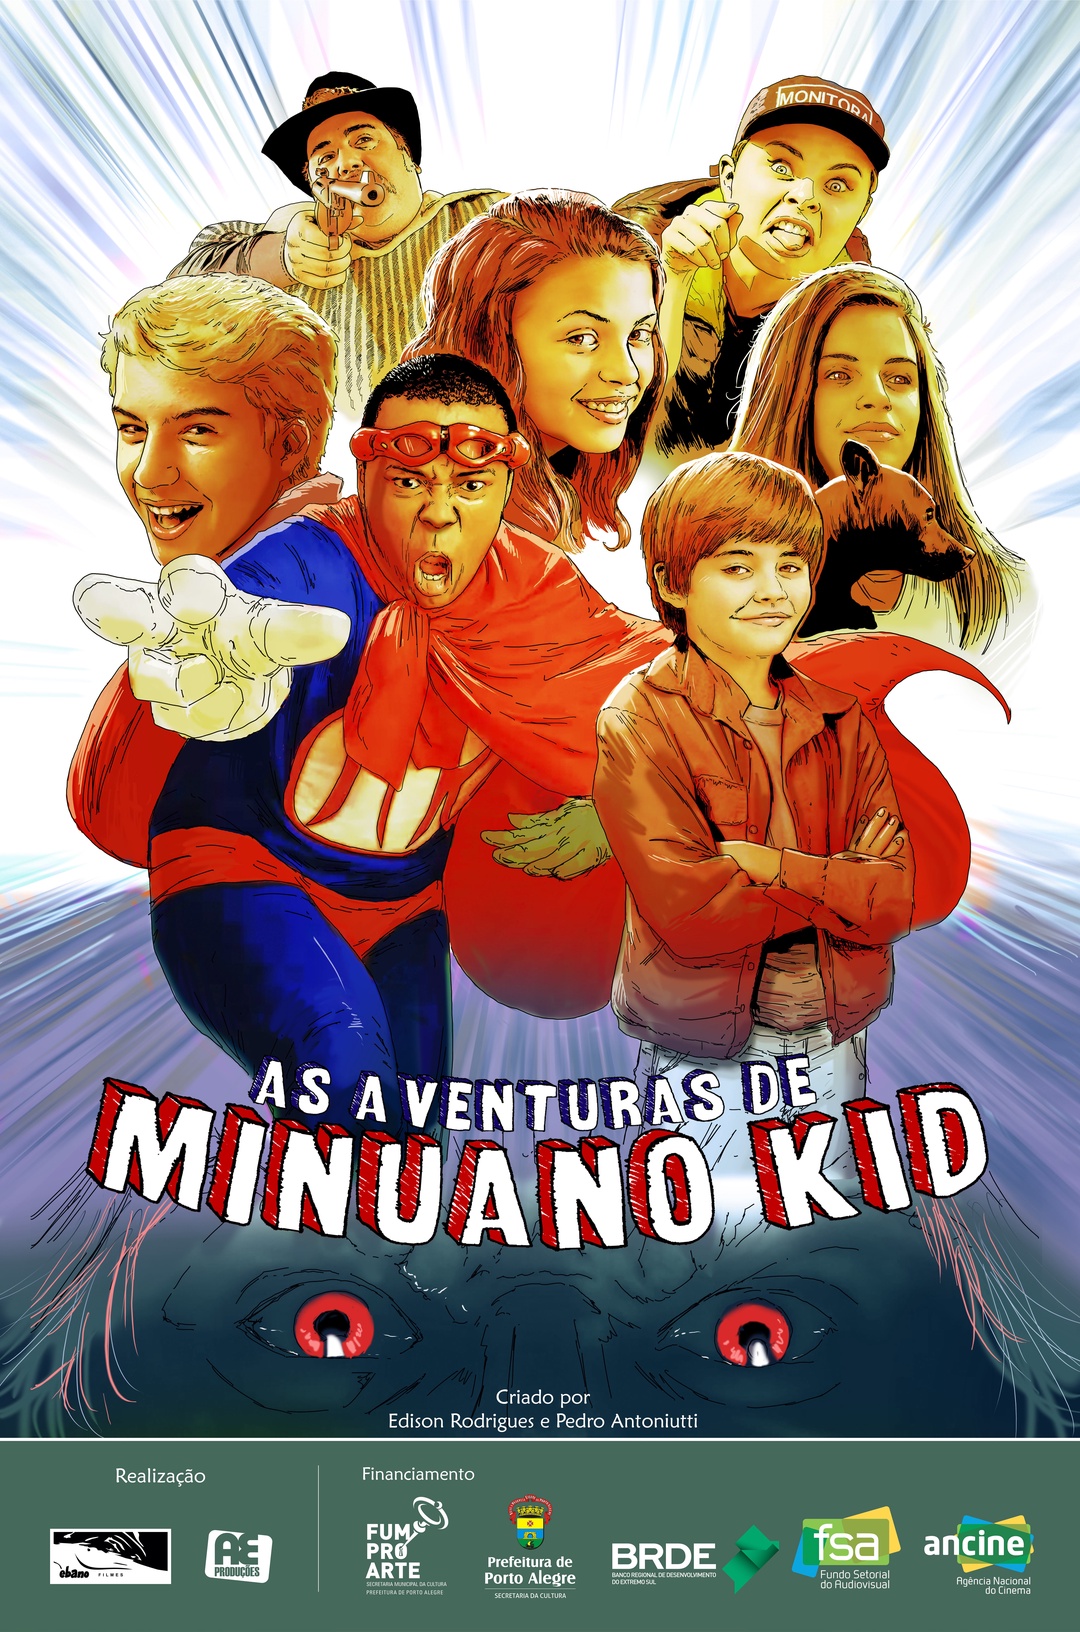 As Aventuras de Minuano Kid